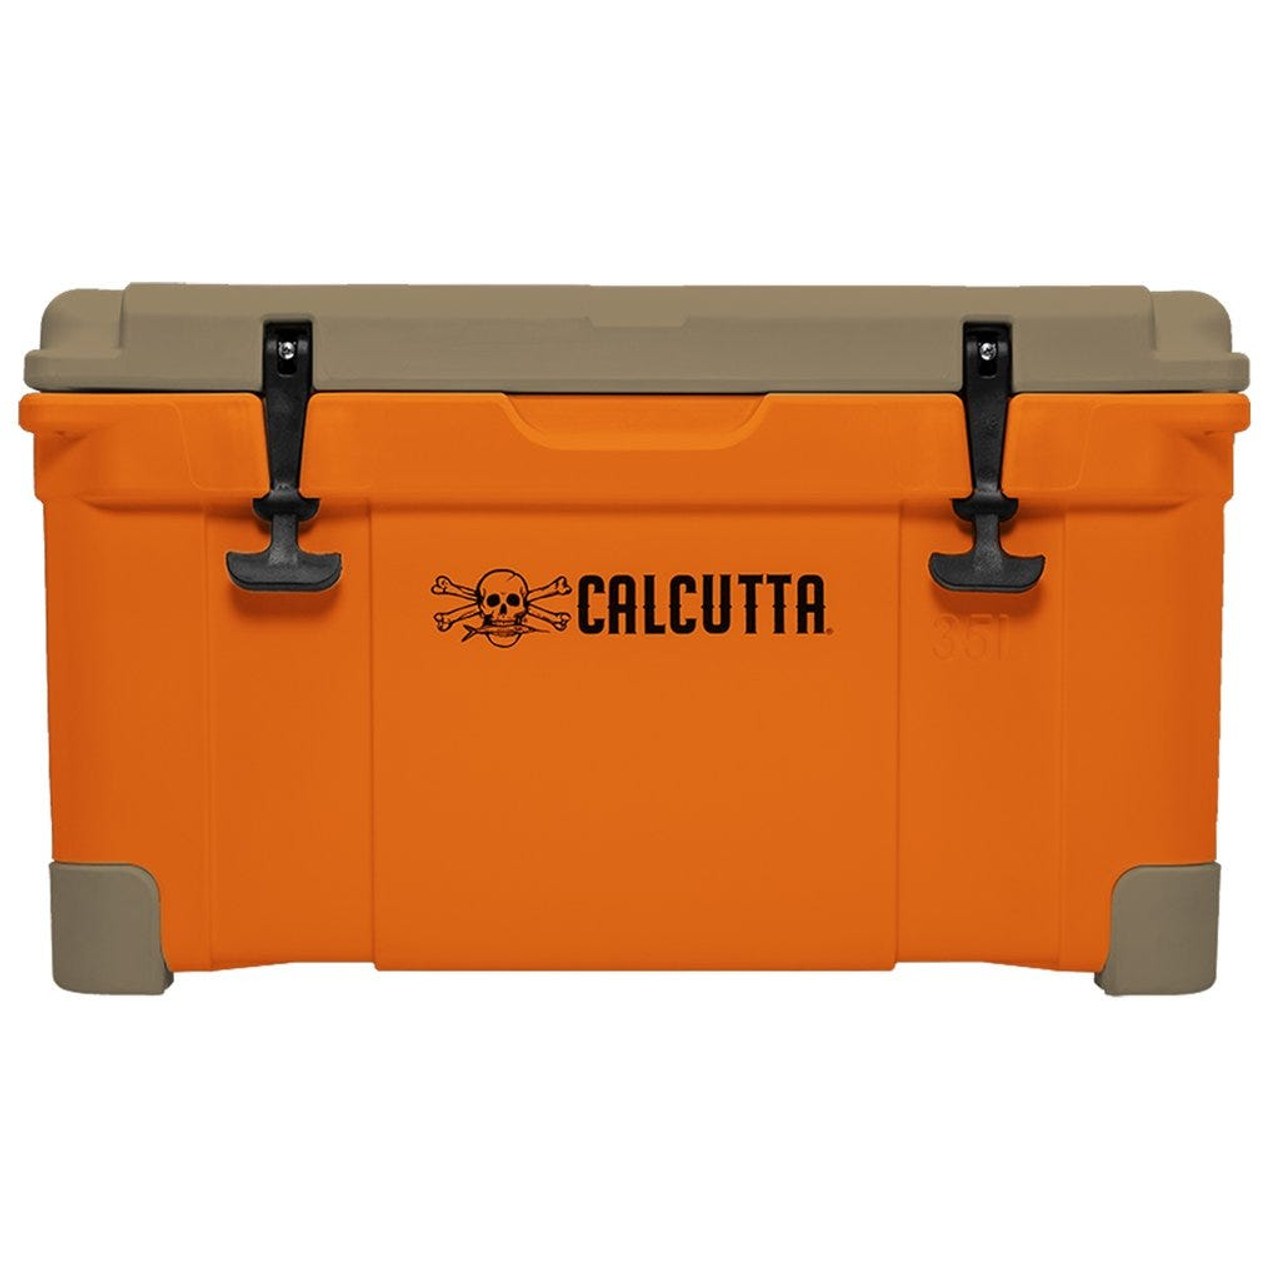 Calcutta Renegade Cooler 35 Liter Orange w/ tan lid wremoveable Tray & LED Drain Plug, EZ Lift Rope Handles, 26.4"Lx15.8"Wx15.4"H